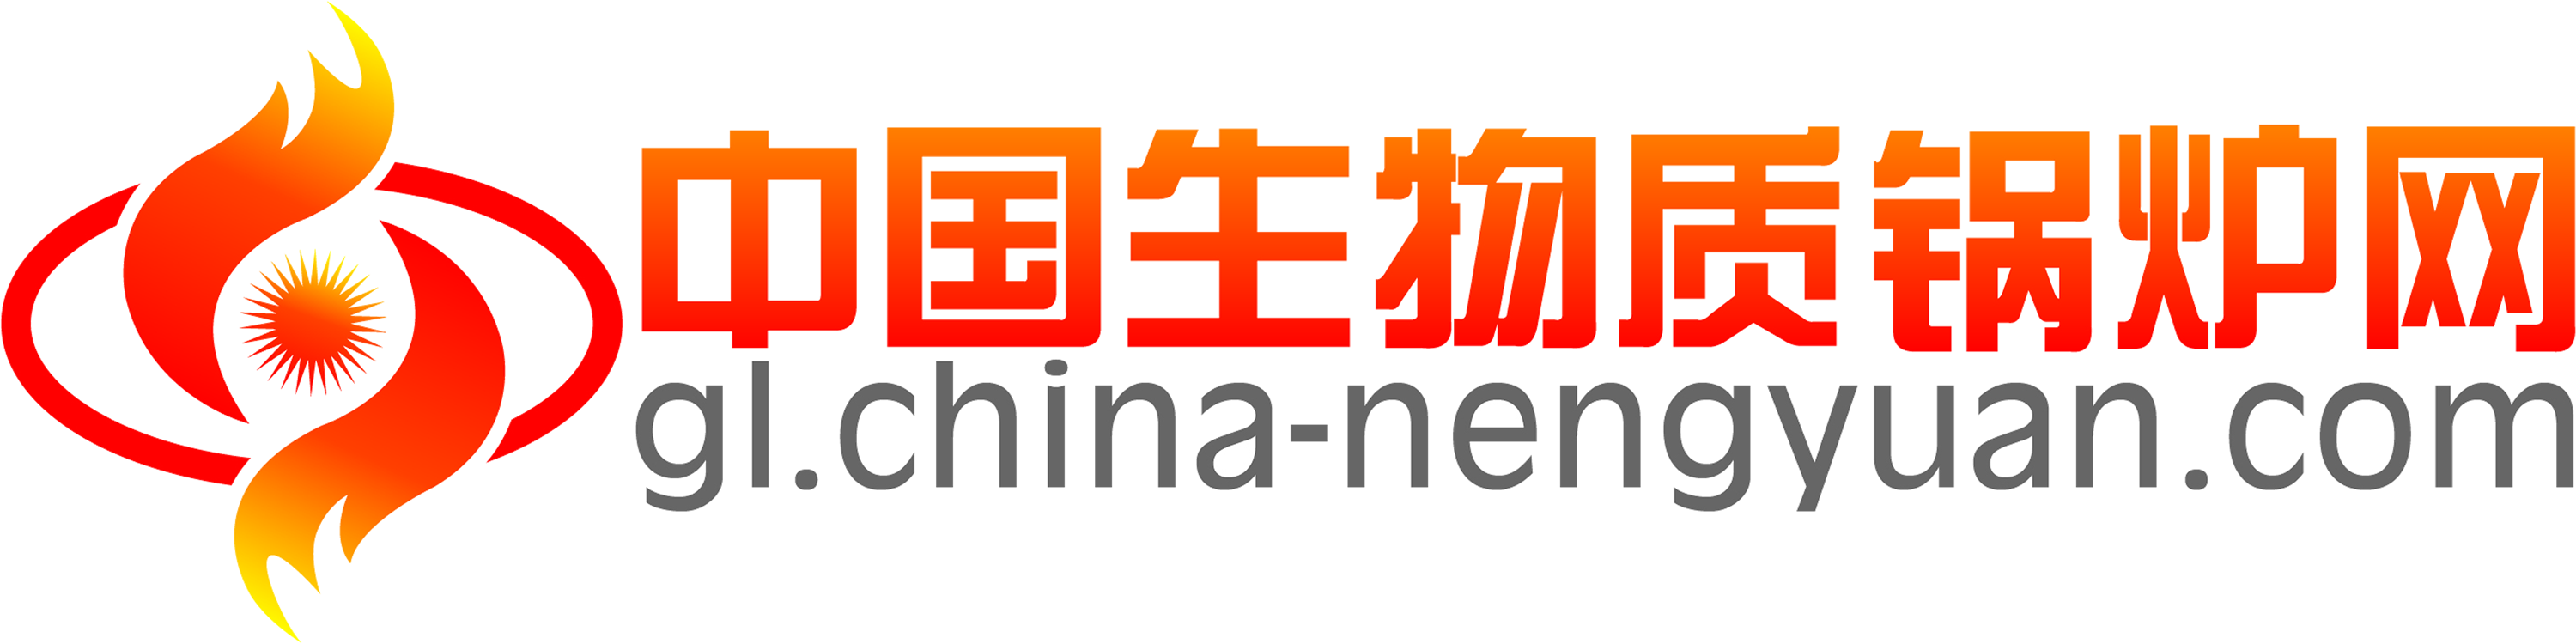 gl.china-nengyuan.com